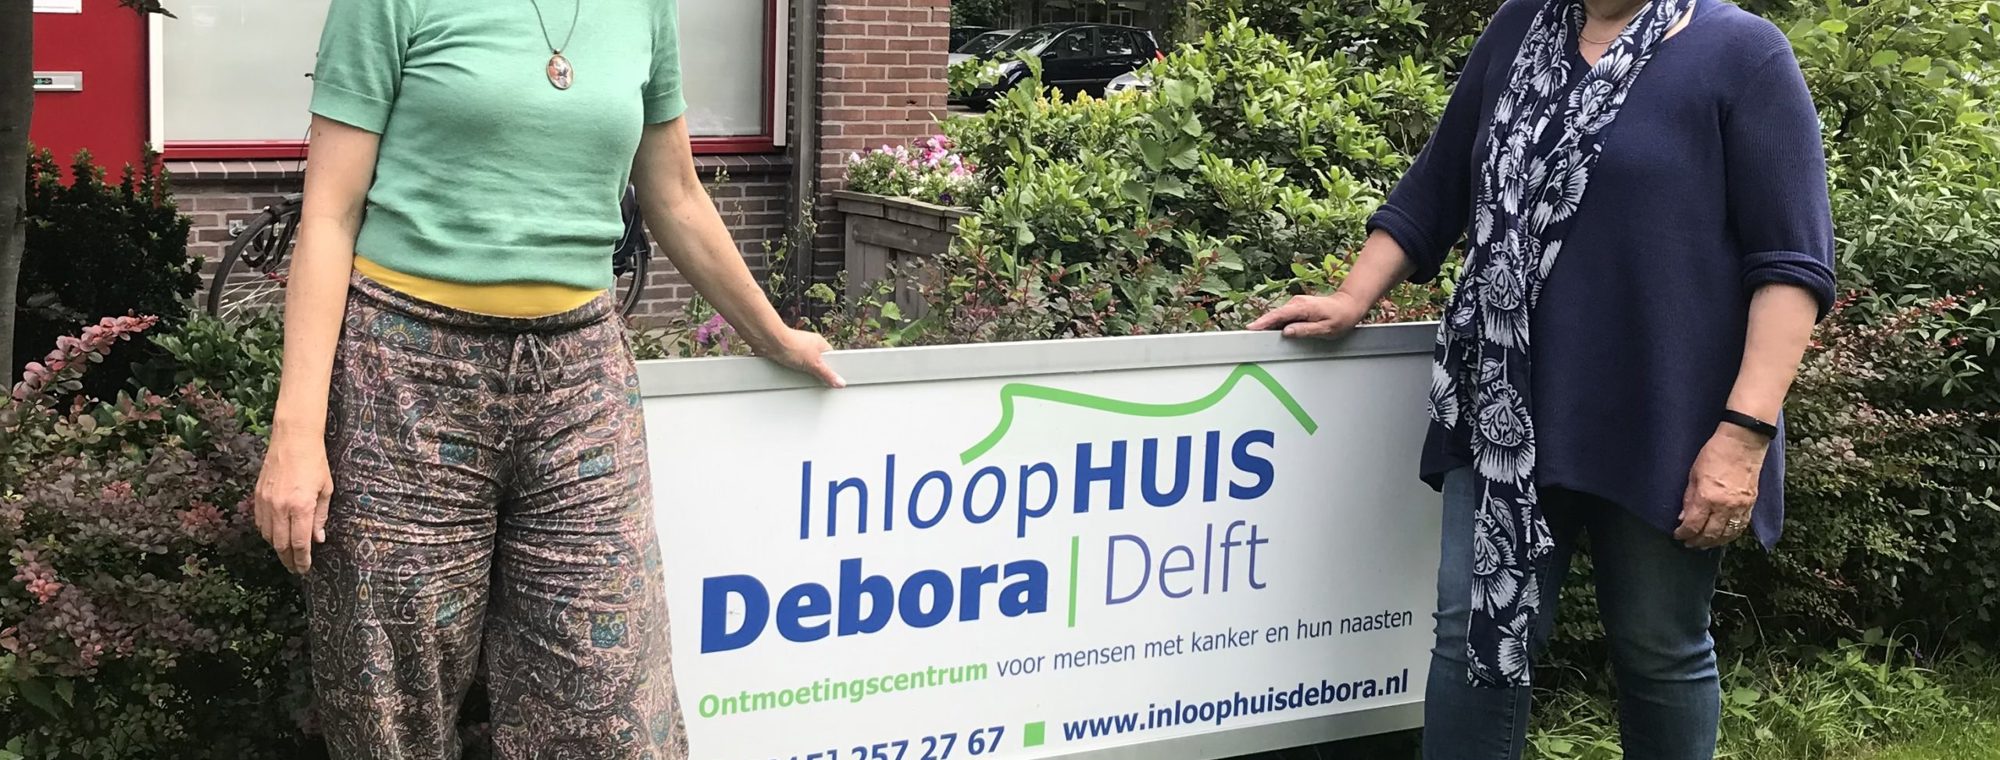 Debora Delft 1